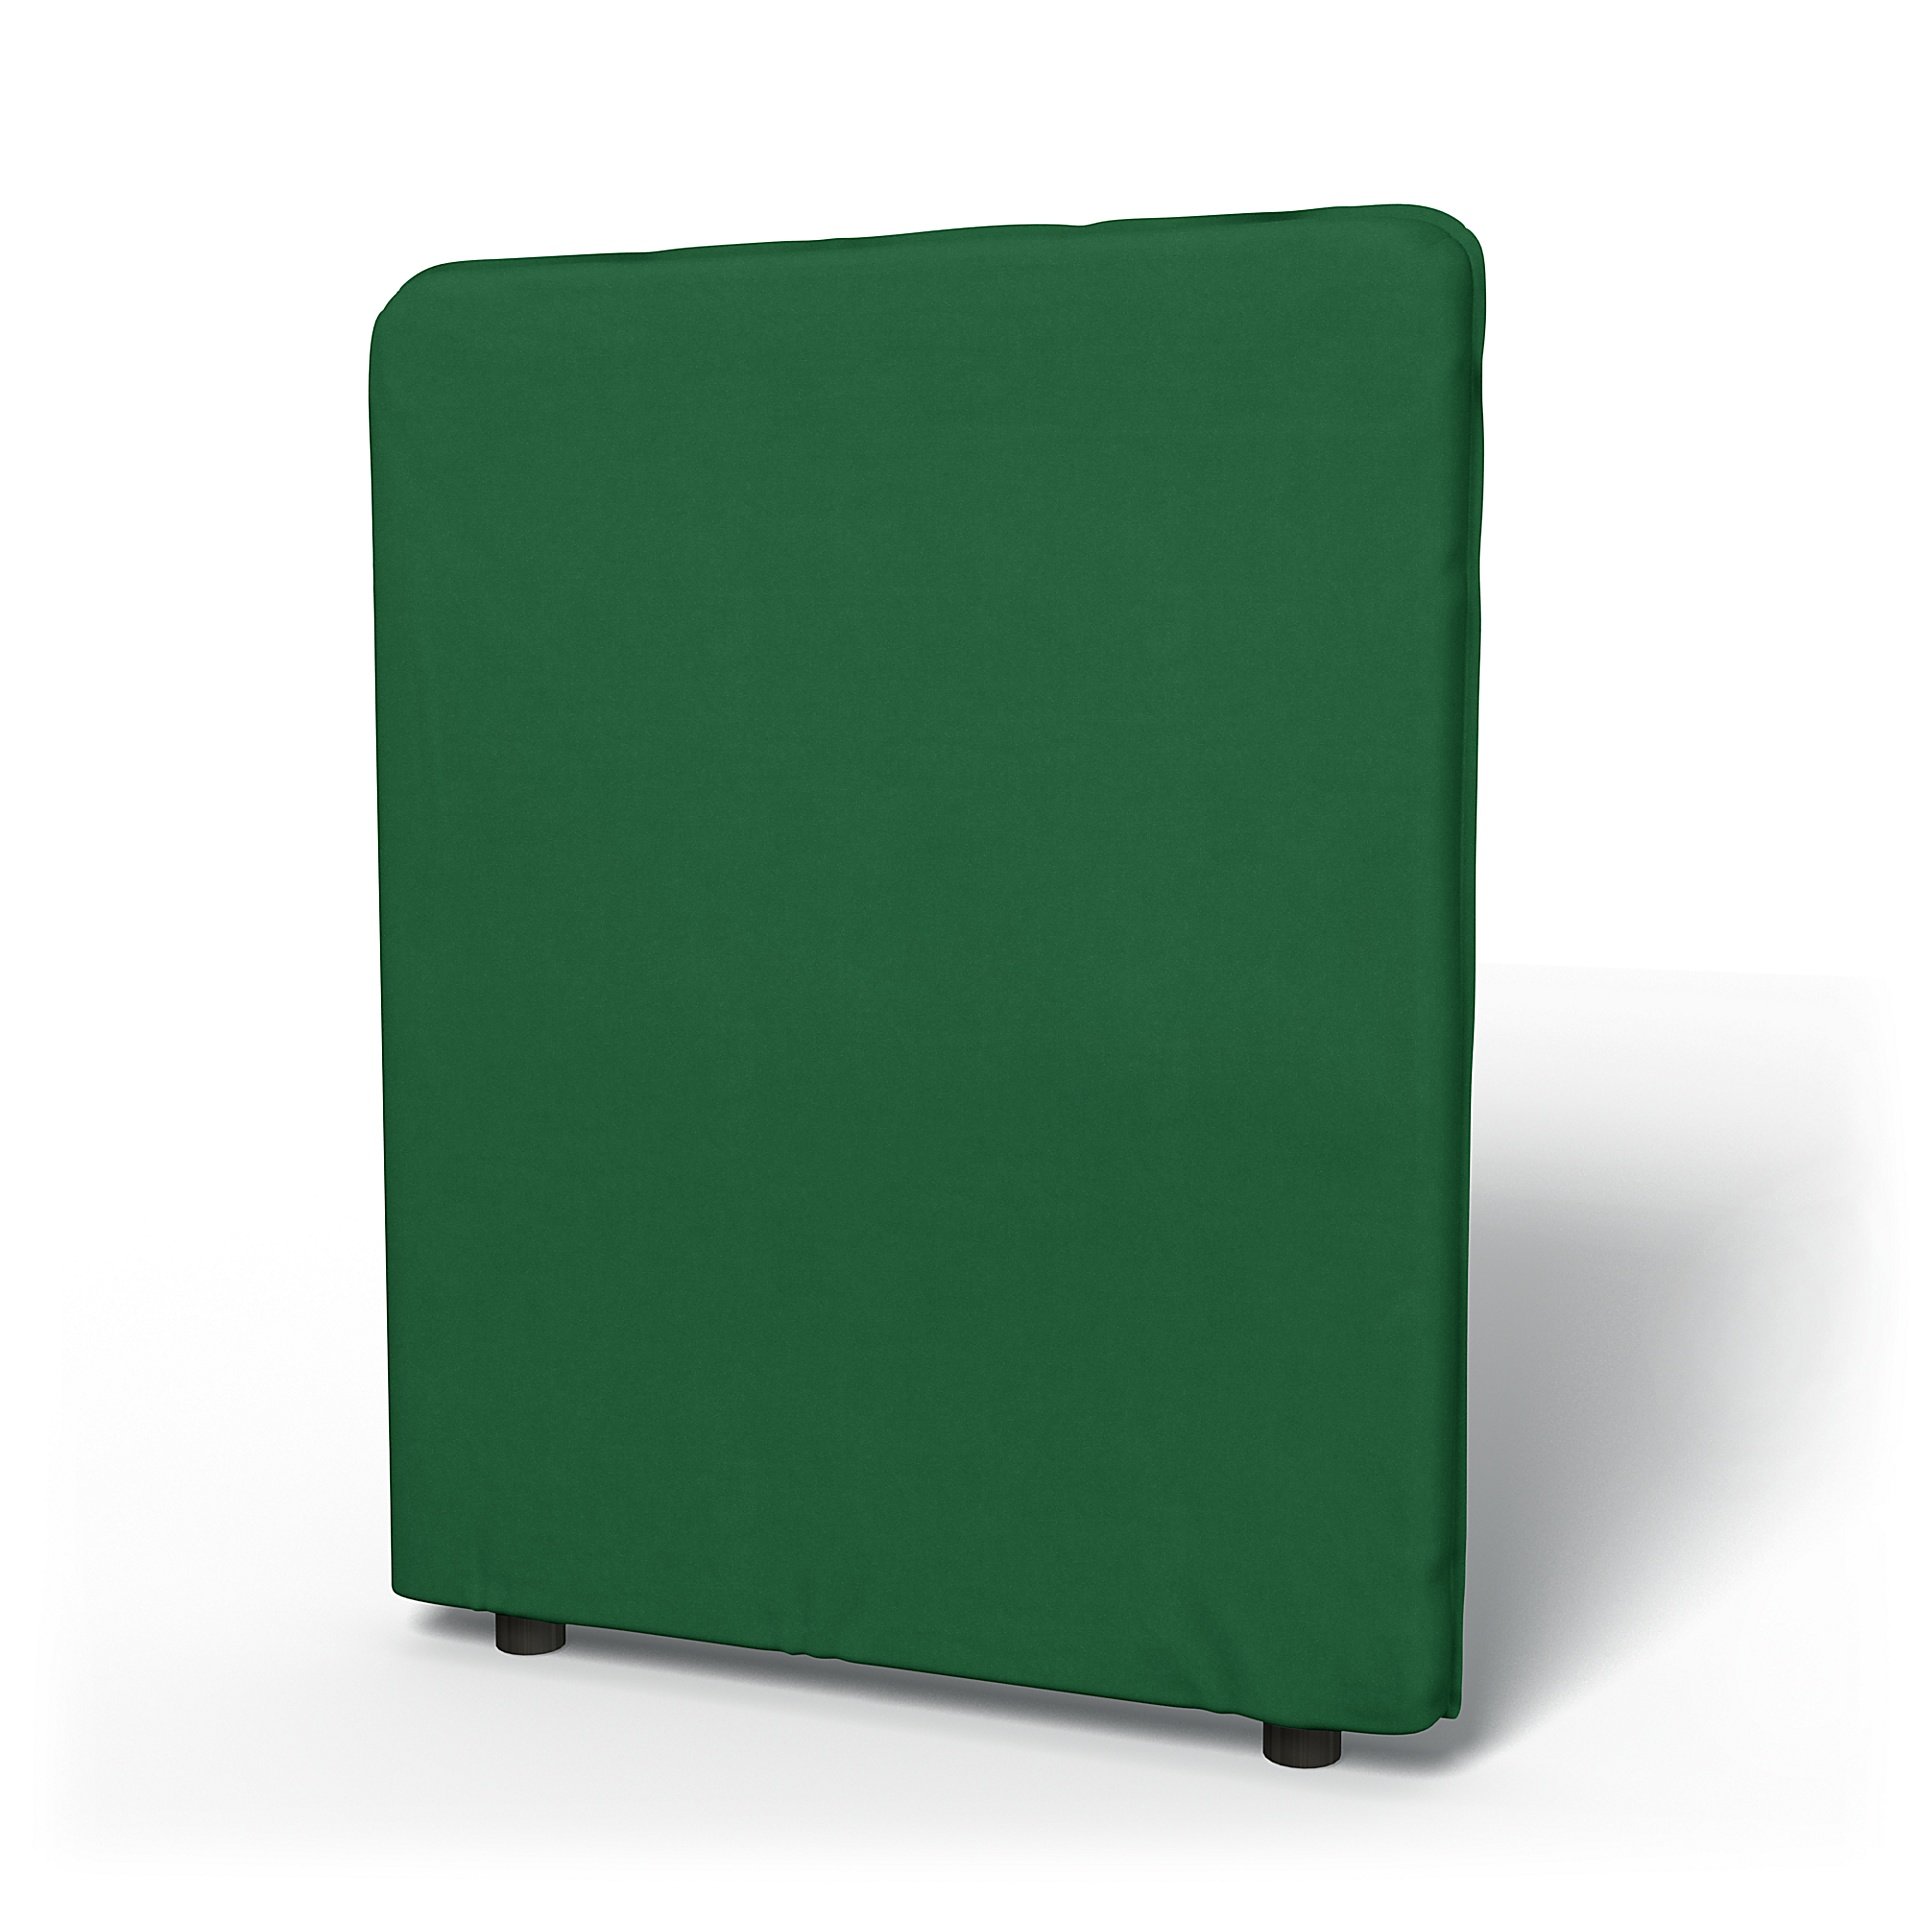 IKEA - Vallentuna High Backrest Cover 80x100cm 32x39in, Abundant Green, Velvet - Bemz